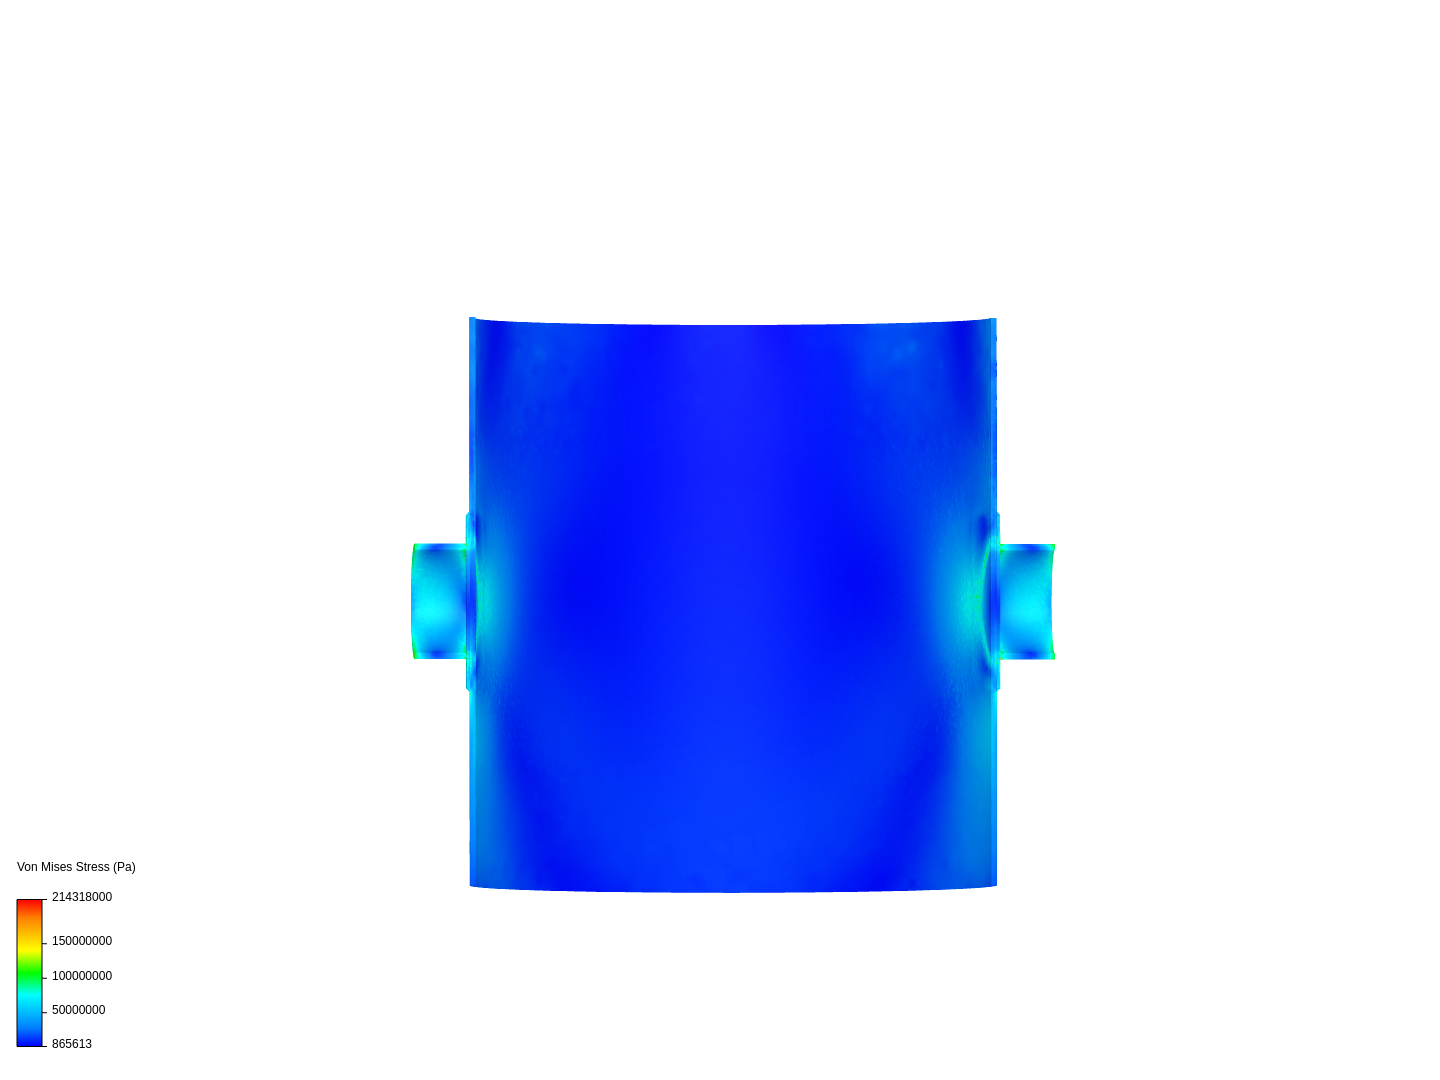 trunnion_simulation image